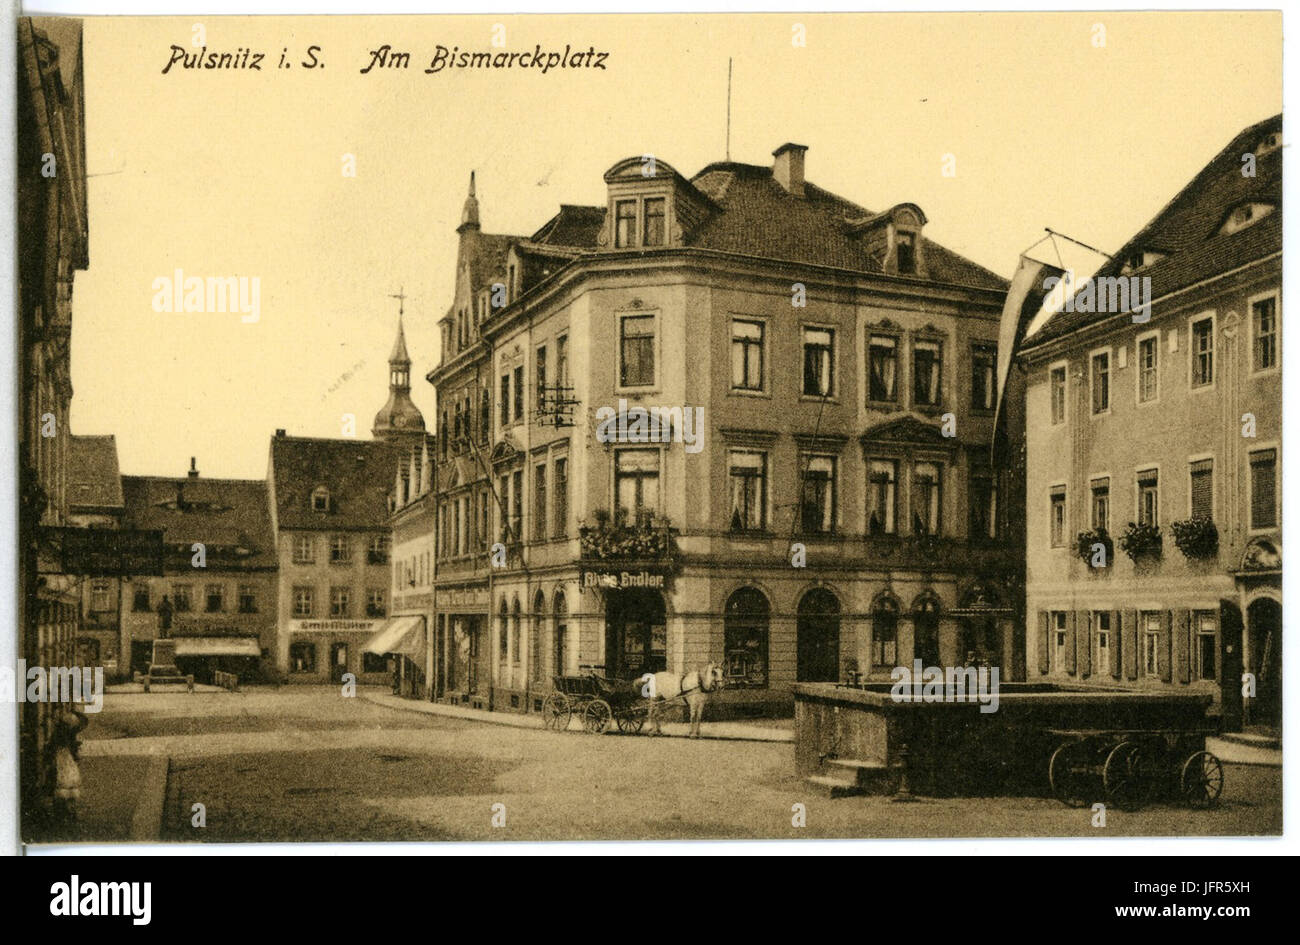 15001-Pulsnitz-1912-Am Bismarckplatz-Brück & Sohn Kunstverlag Stock Photo